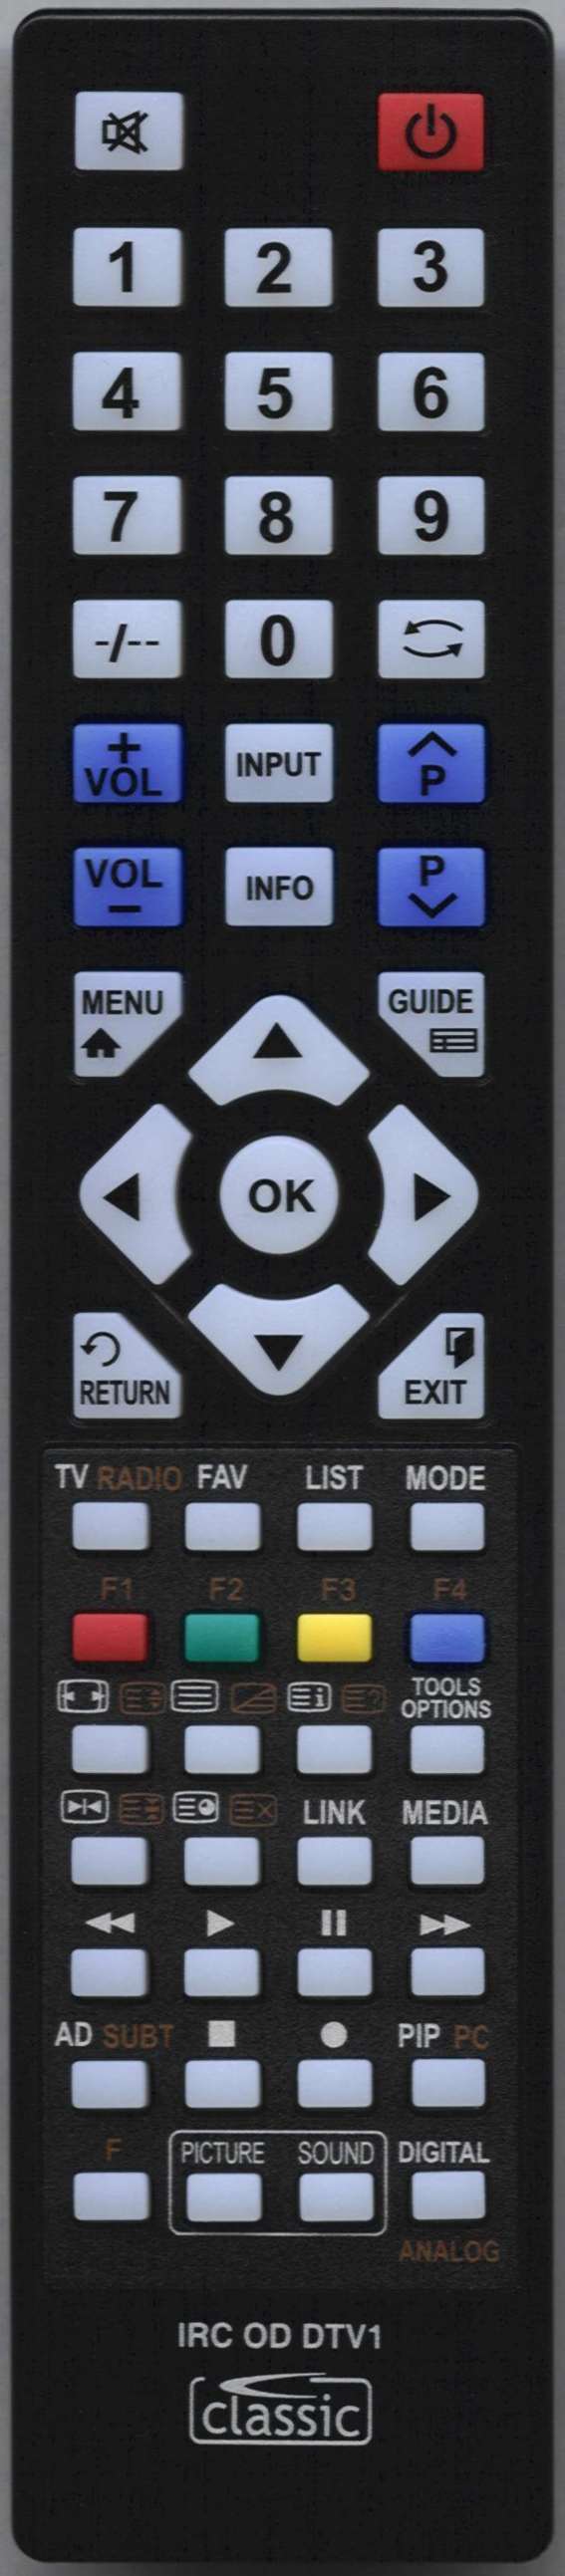 EMOTION W185/69G-GB-TCDUP-UK Remote Control Alternative